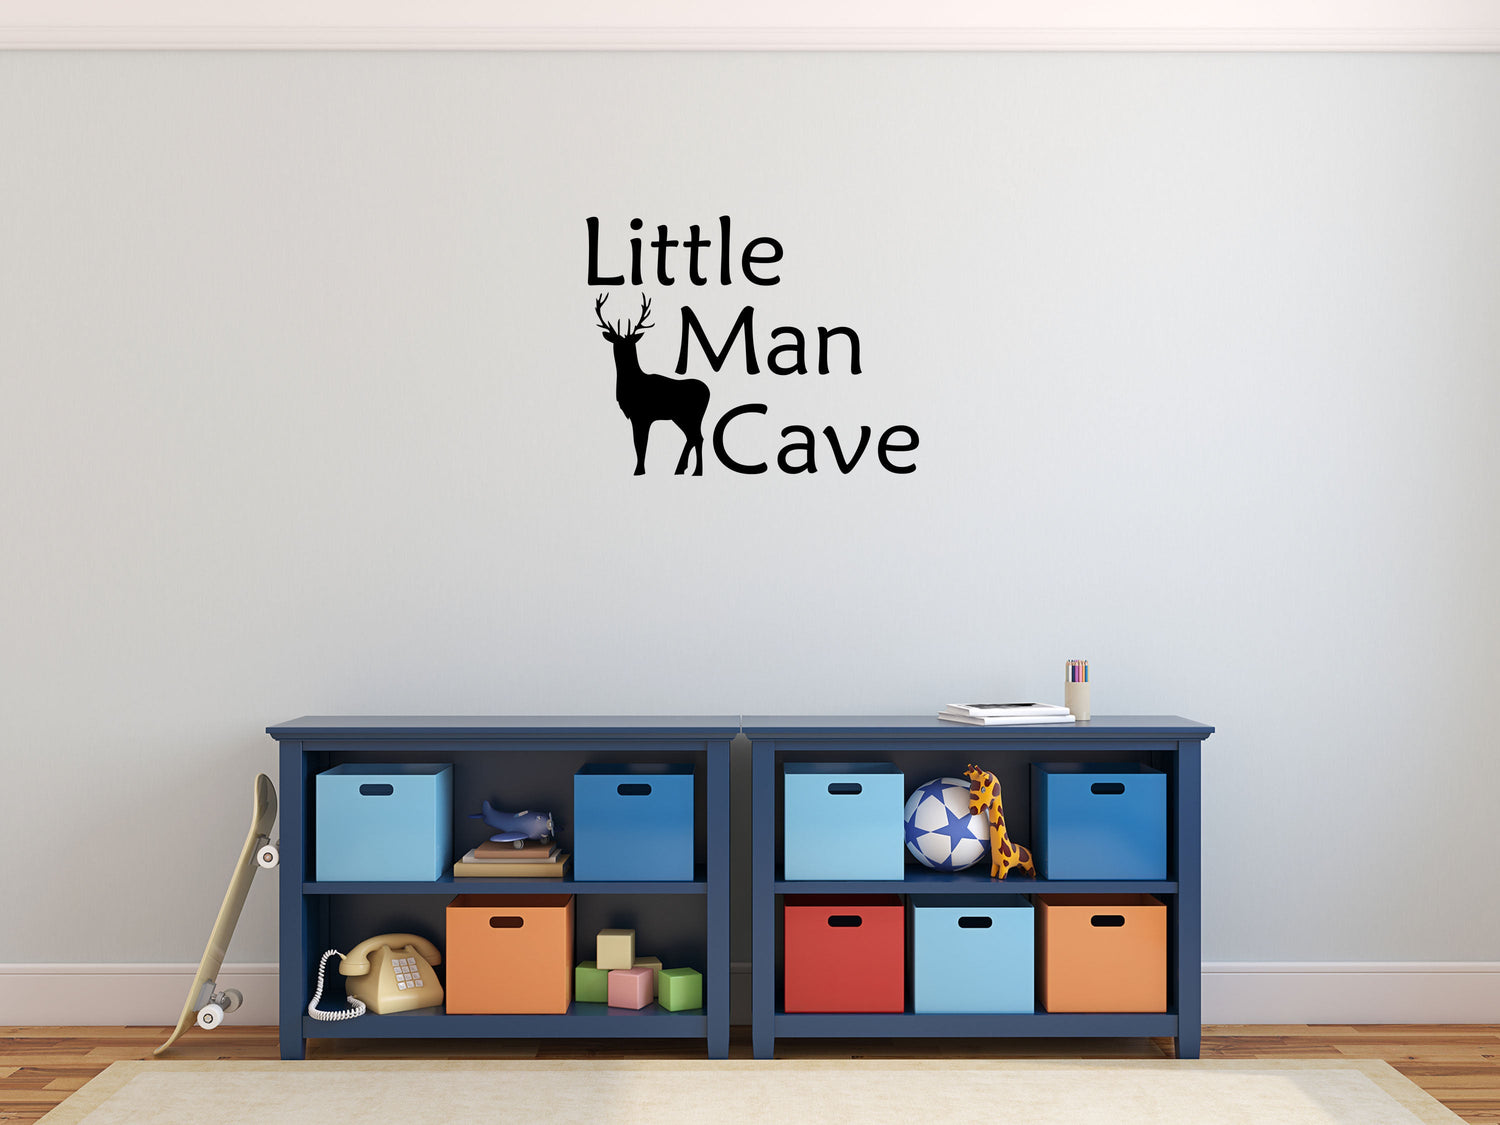 Little Man Cave - Inspirational Wall Decals Vinyl Wall Decal Inspirational Wall Signs 